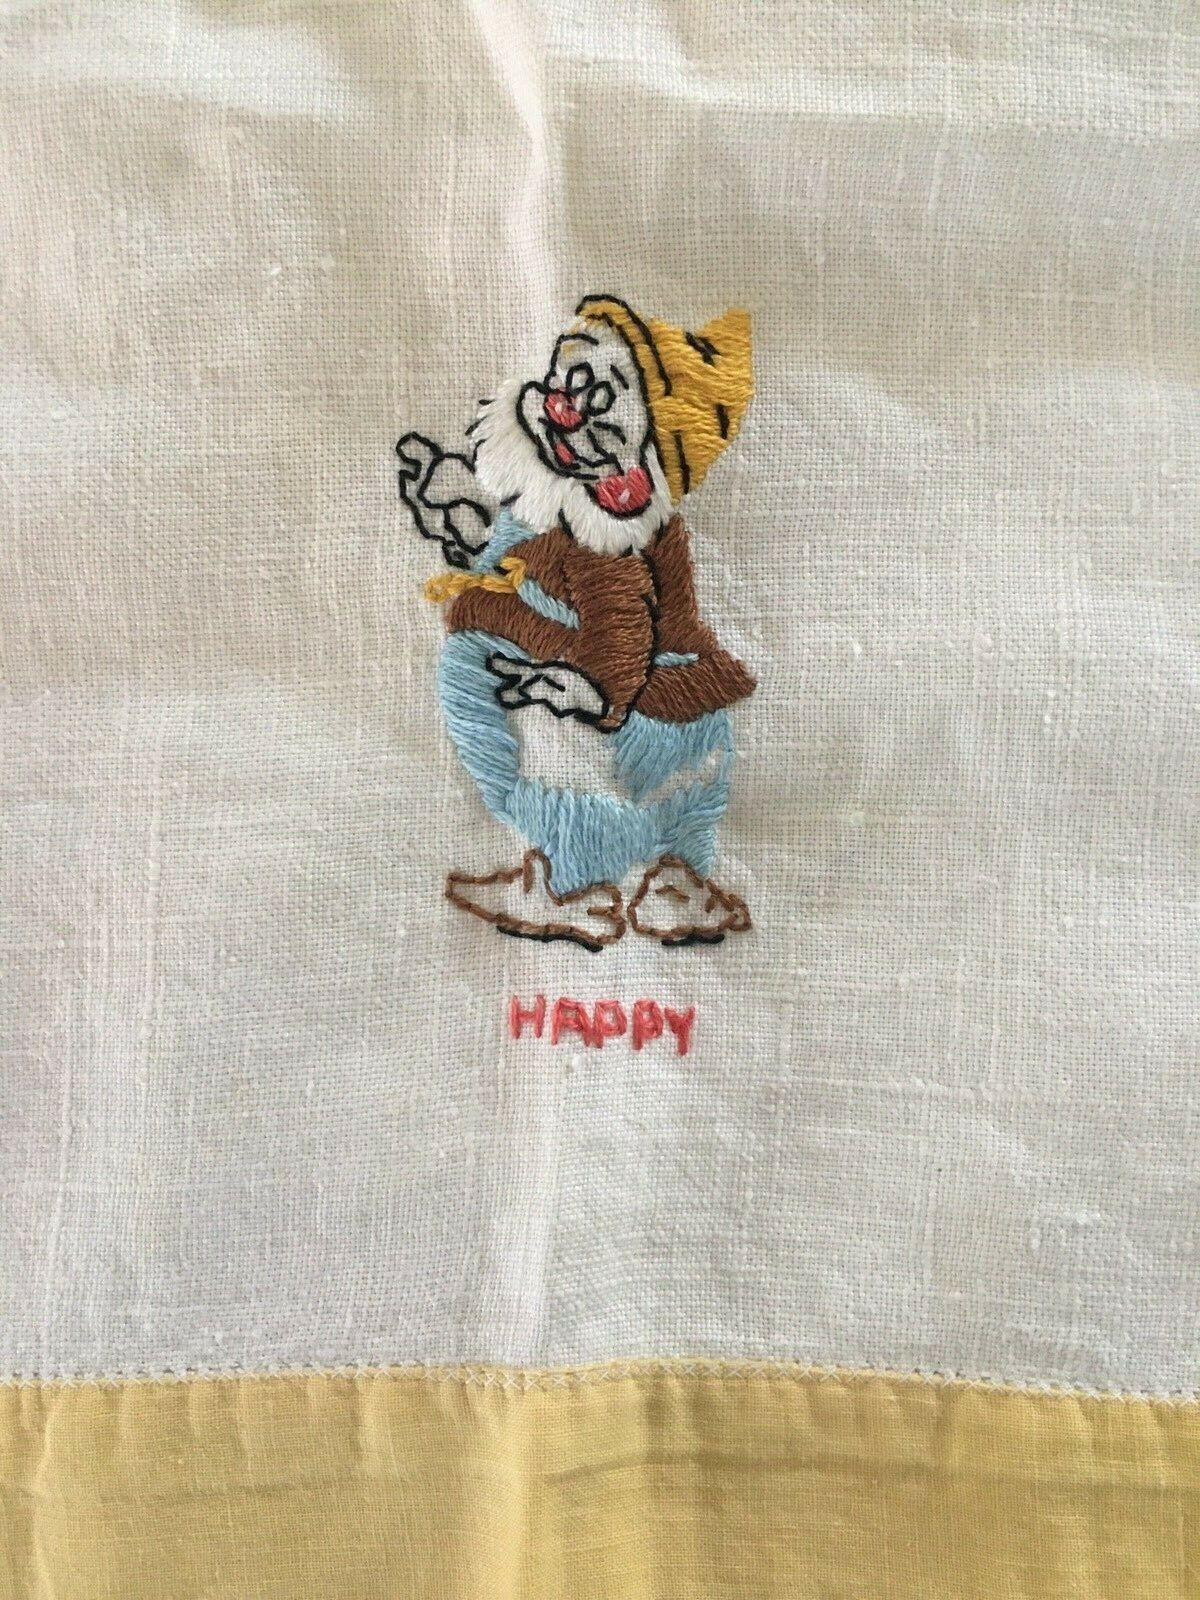 Vintage Snow White HAPPY Linen Hanky Towel Vintage Dwarfs Disney Embroidered